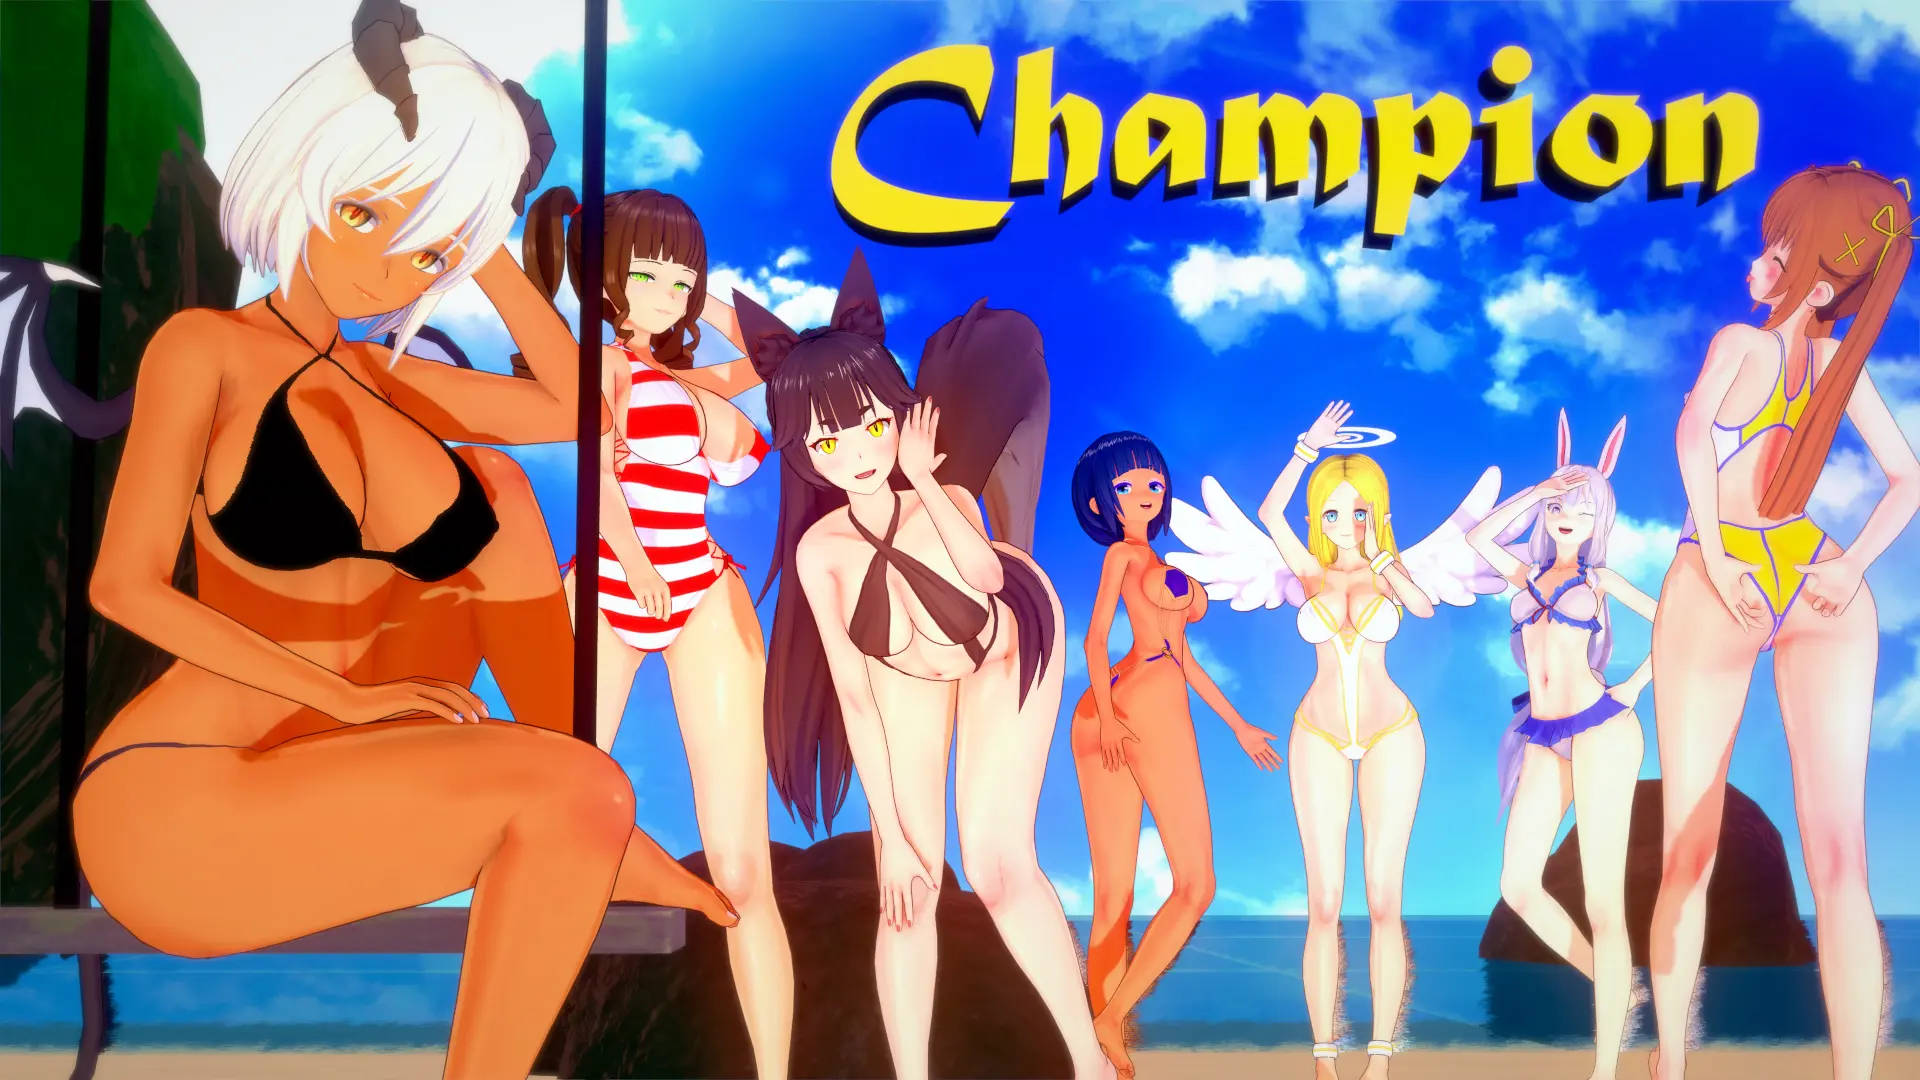 Champion [v0.05] main image